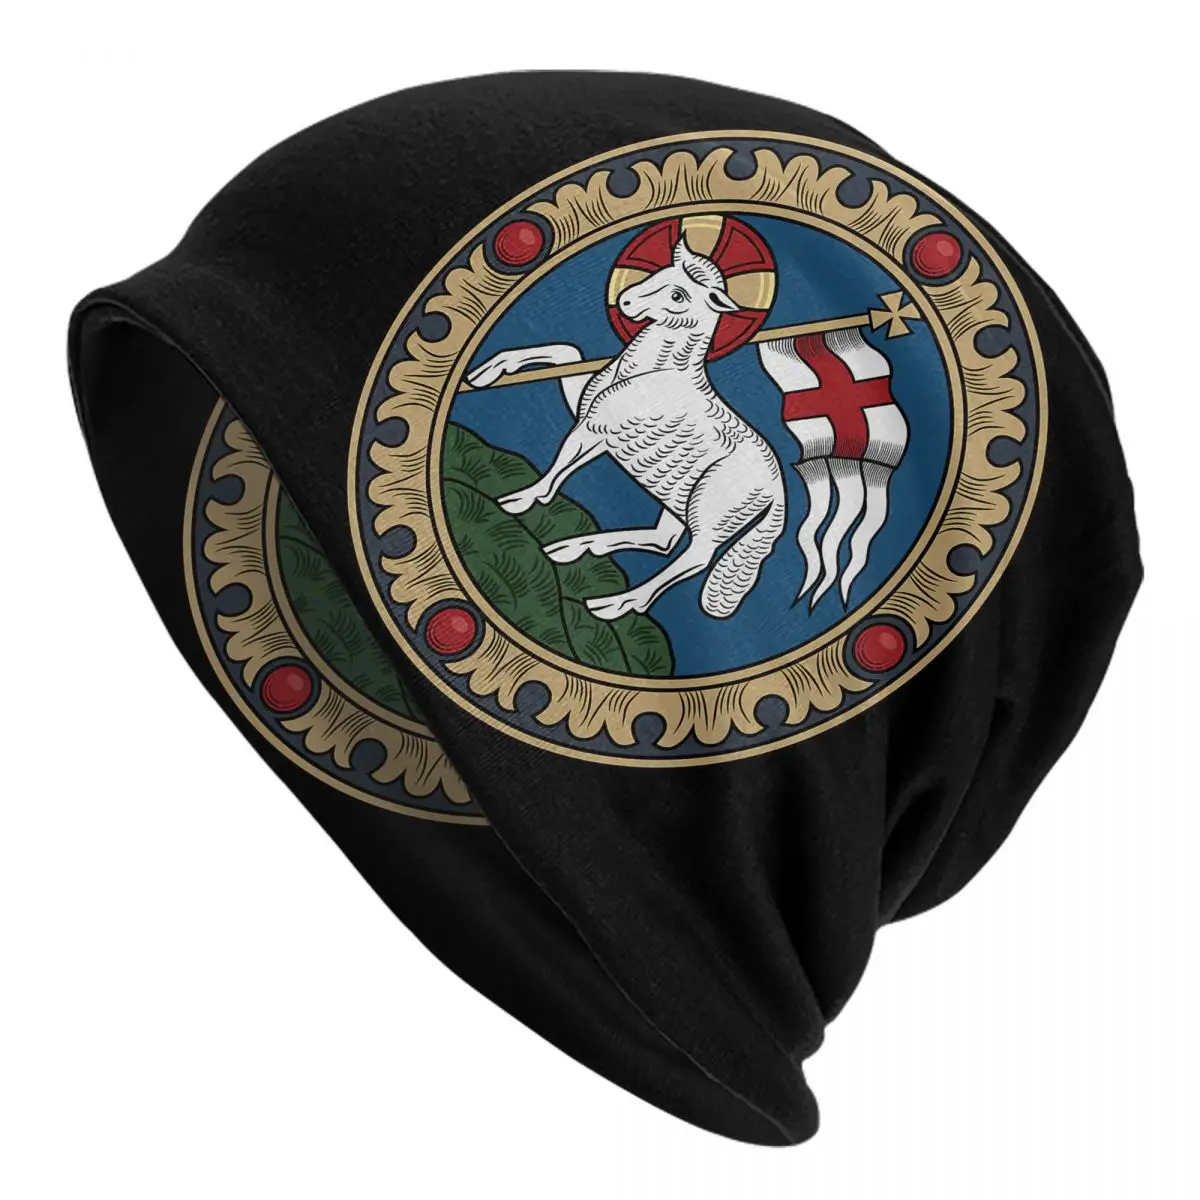 Agnus Dei Adult Men's Women's Knit Hat Keep warm winter Funny knitted hat